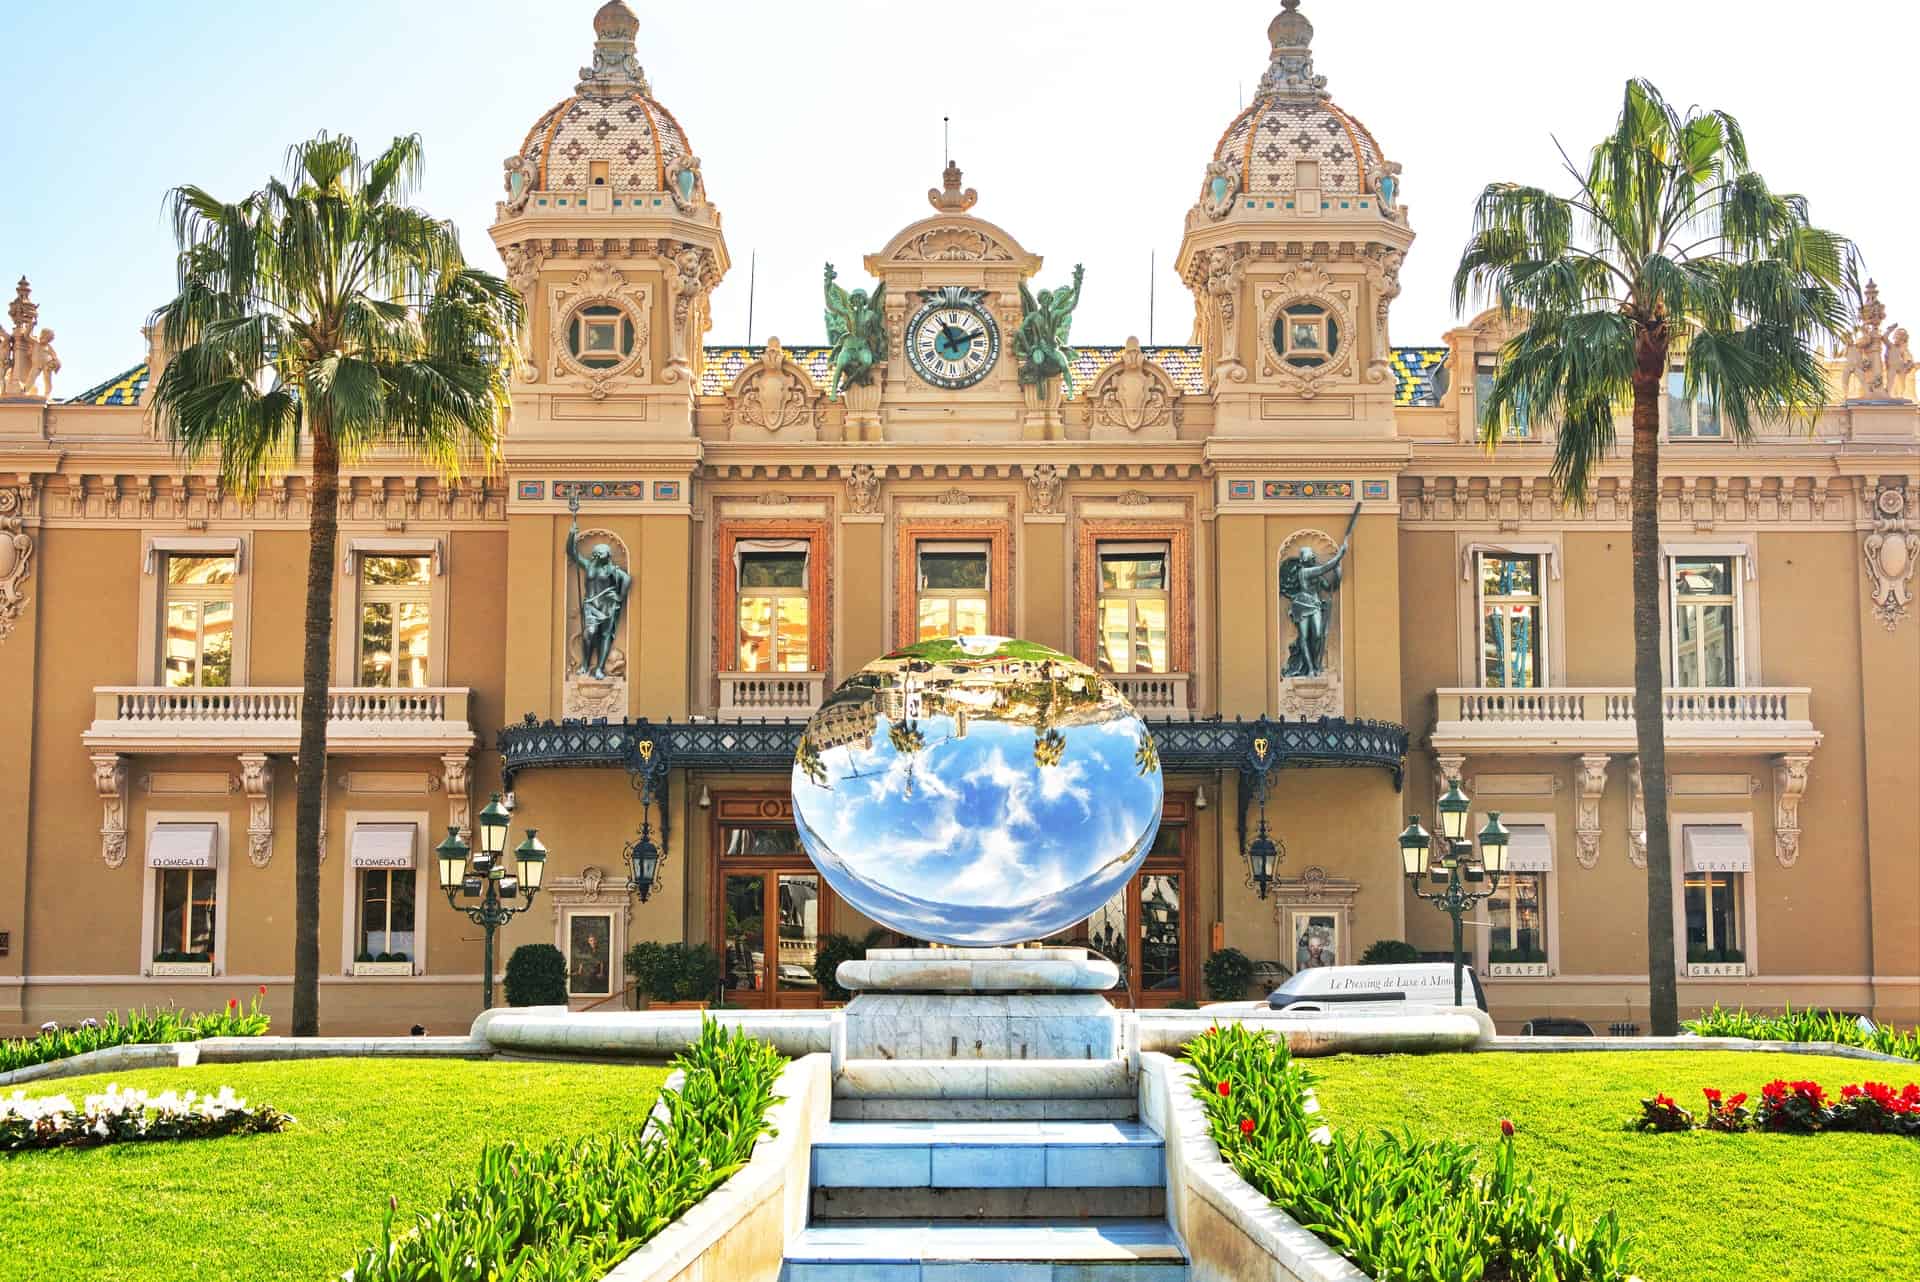 Best things to do in Monaco - AJ Saunders - Monte Carlo Casino by Ravi Tripathi on Unsplash